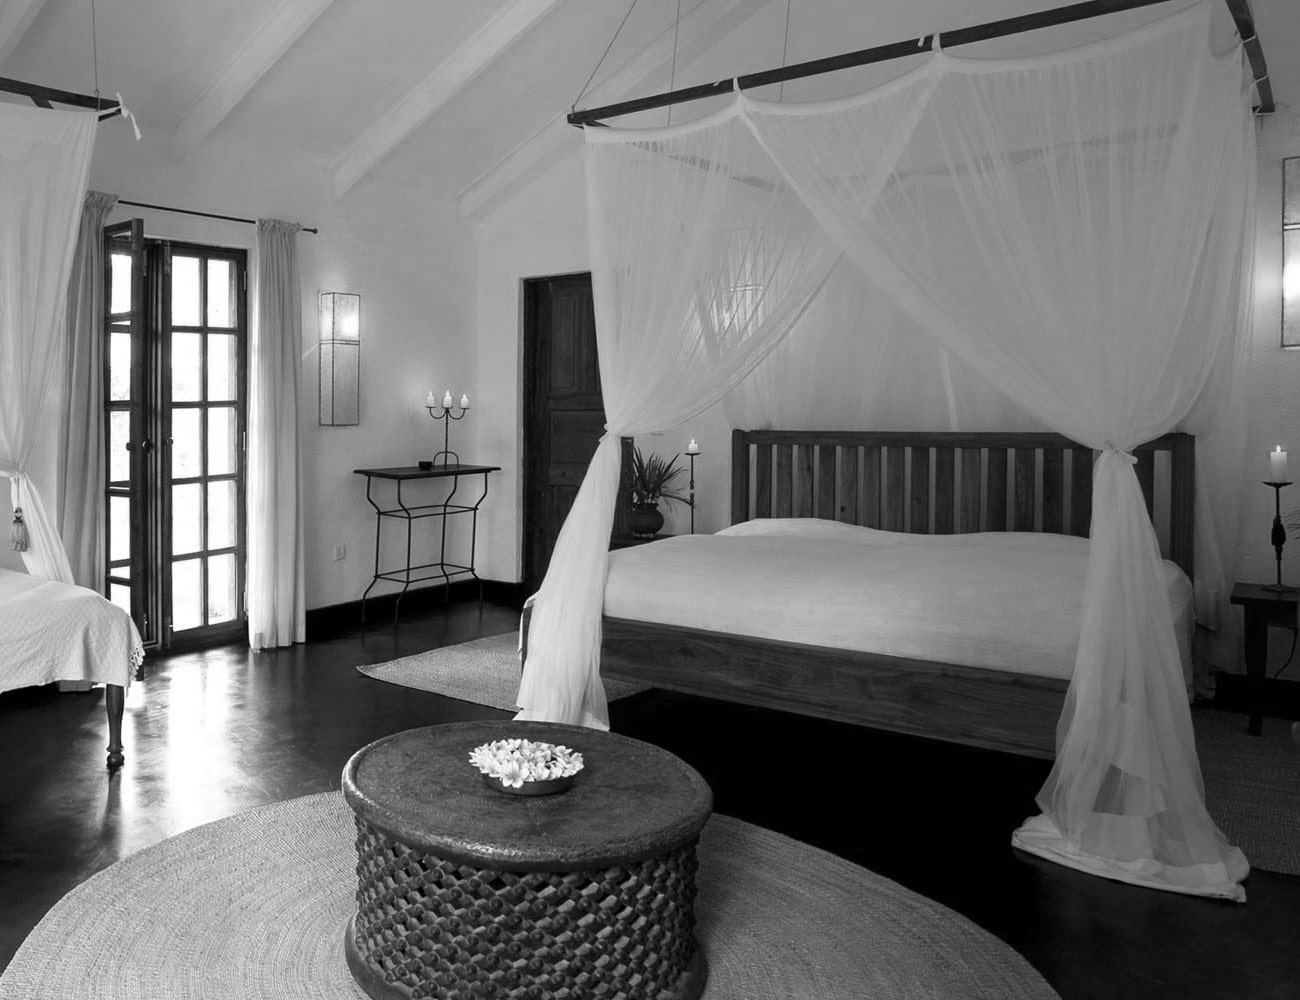 Bedrooms at the Plantation Lodge